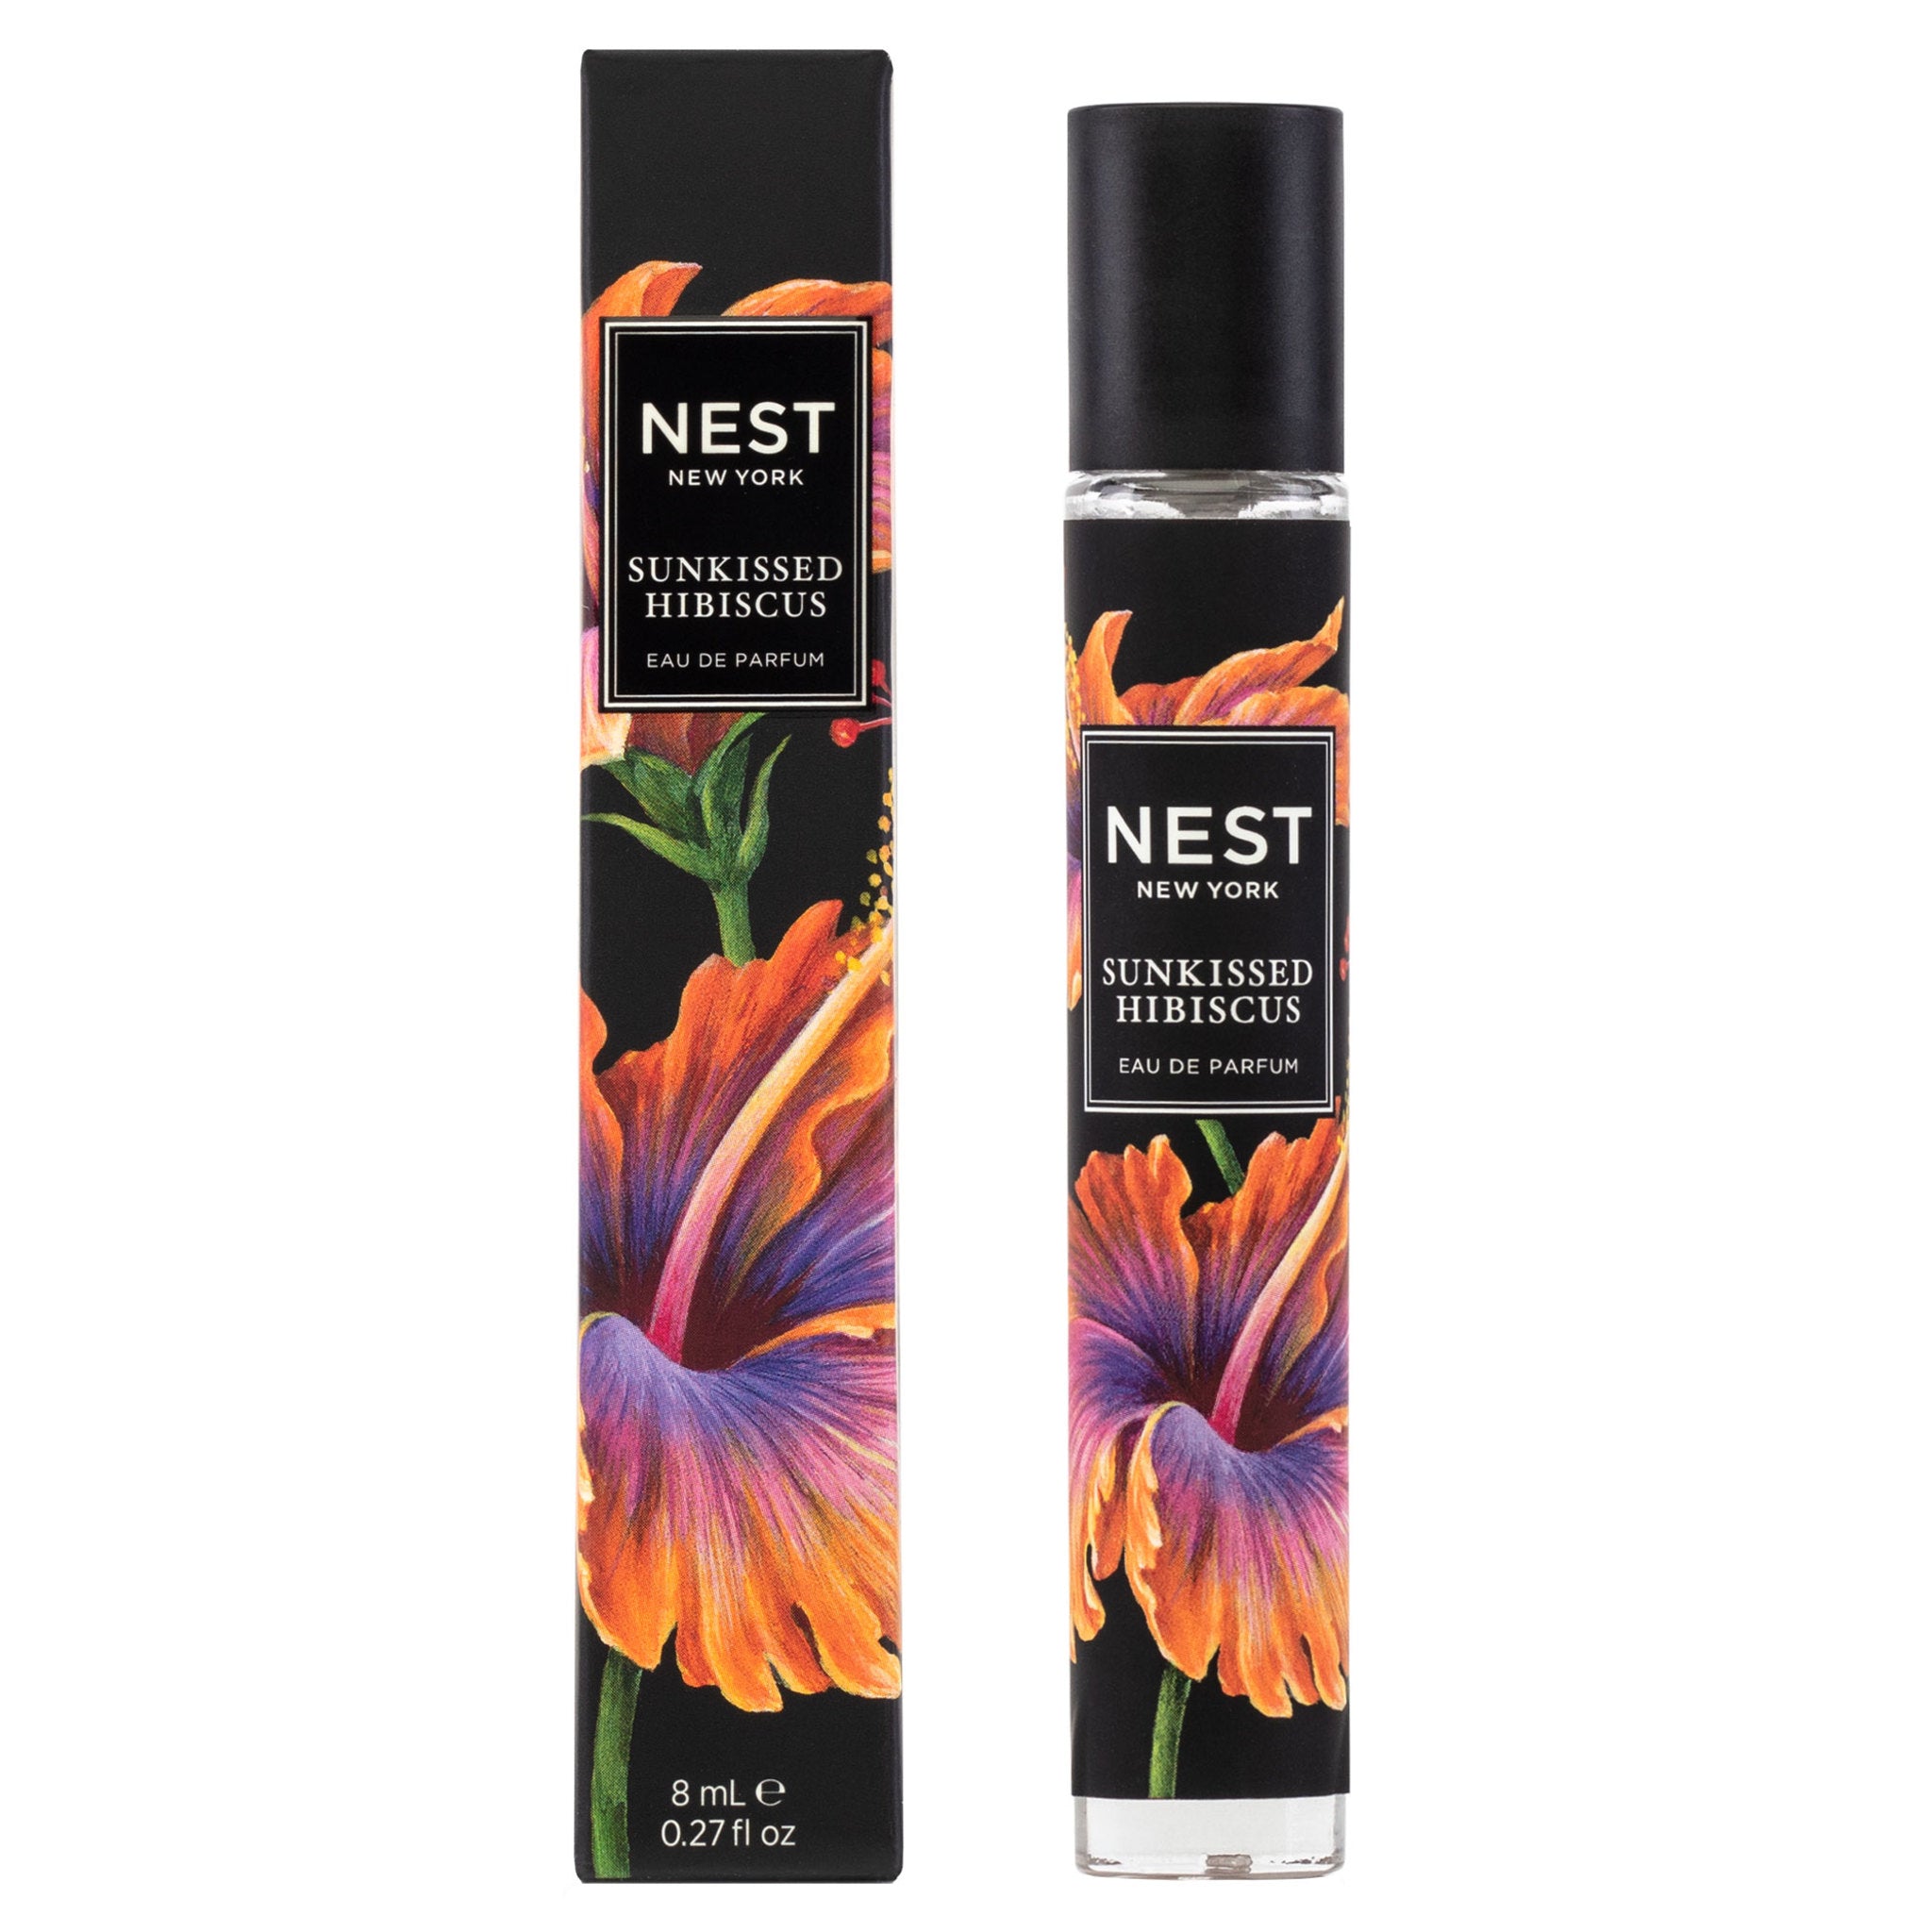 Nest Sunkissed Hibiscus Eau de Parfum Size variant: 8 ml main image.